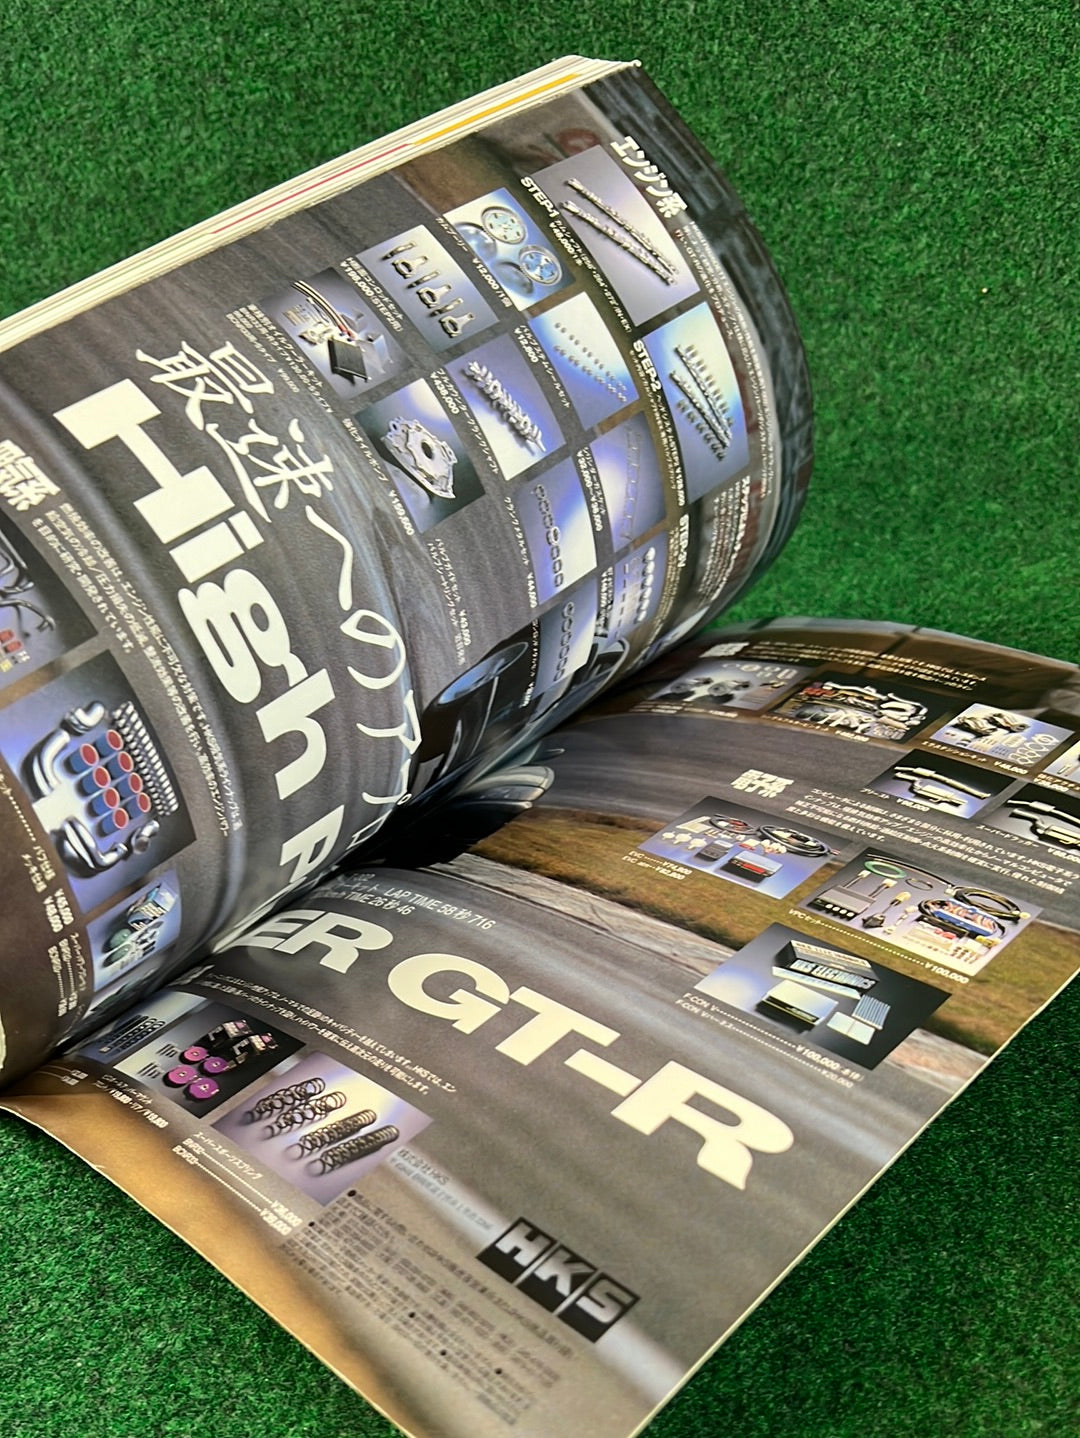 Hyper Rev Magazine - Nissan Skyline R33 & R32 GTR Vol. 15